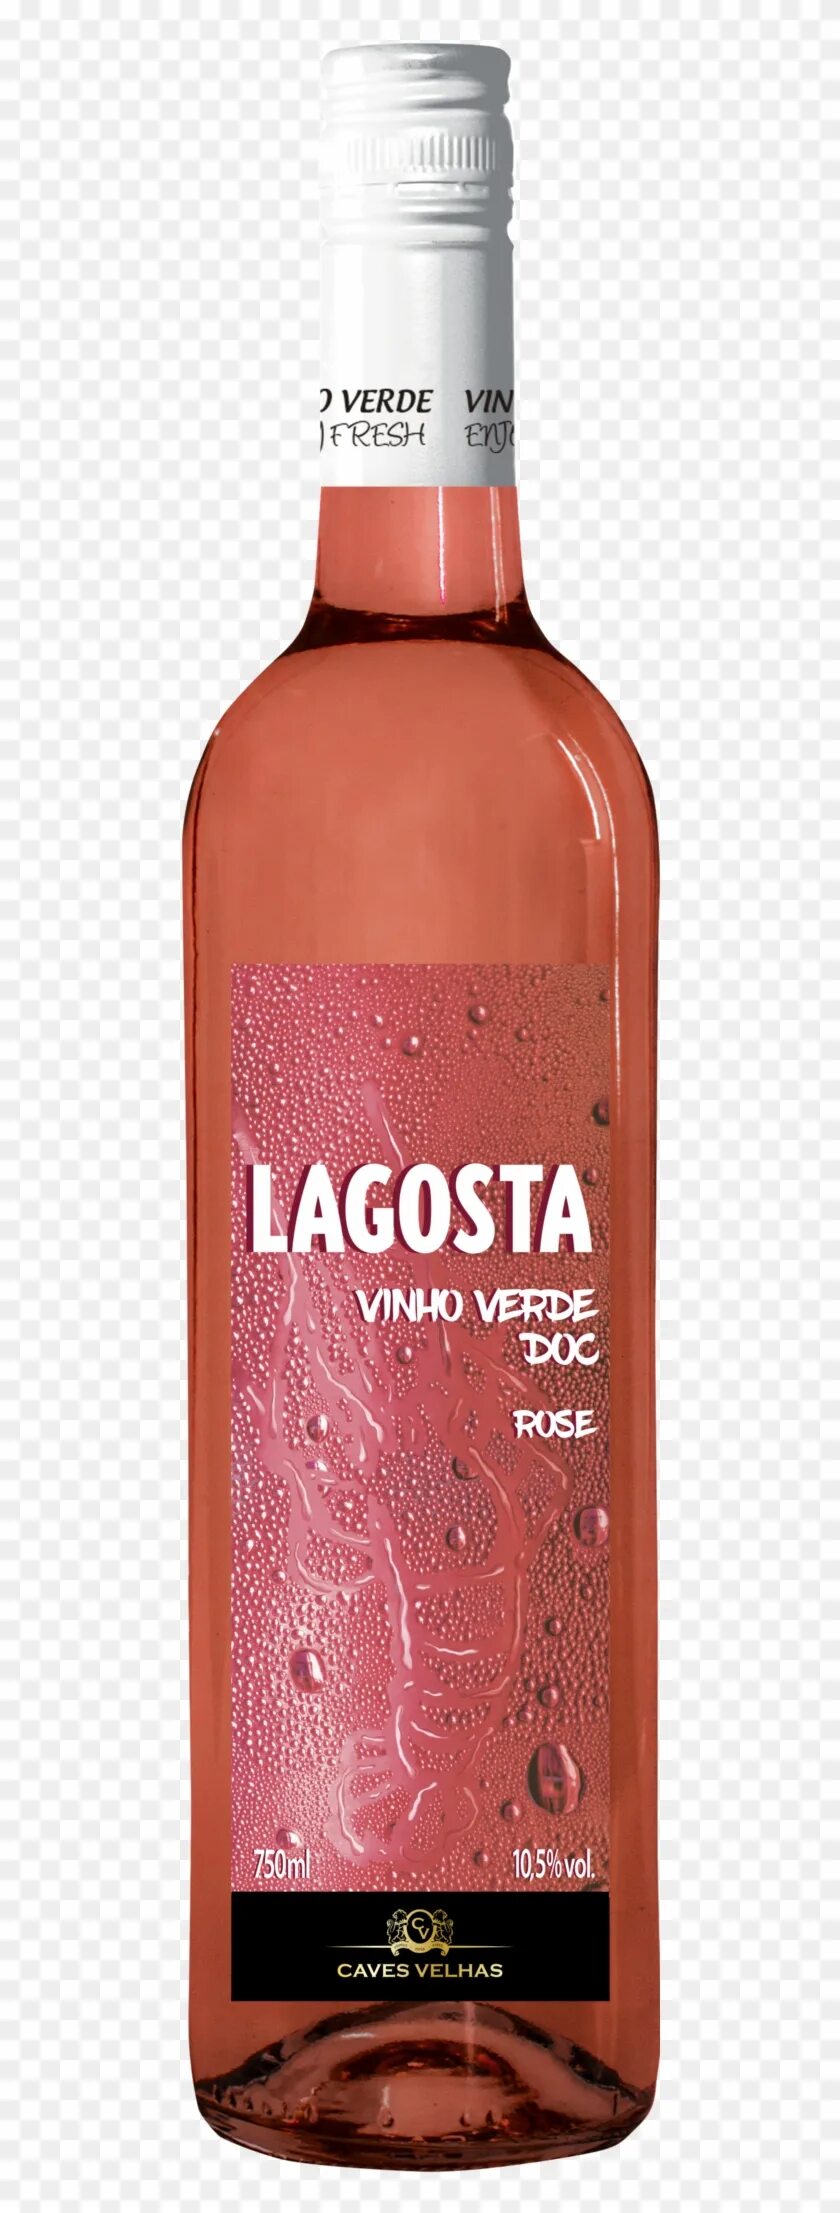 Вина португалии розовое полусухое. Лагошта Виньо Верде. Виньо Верде вино Португалия. Виньо Верде вино розовое. Вино Vinho Verde Португалия.